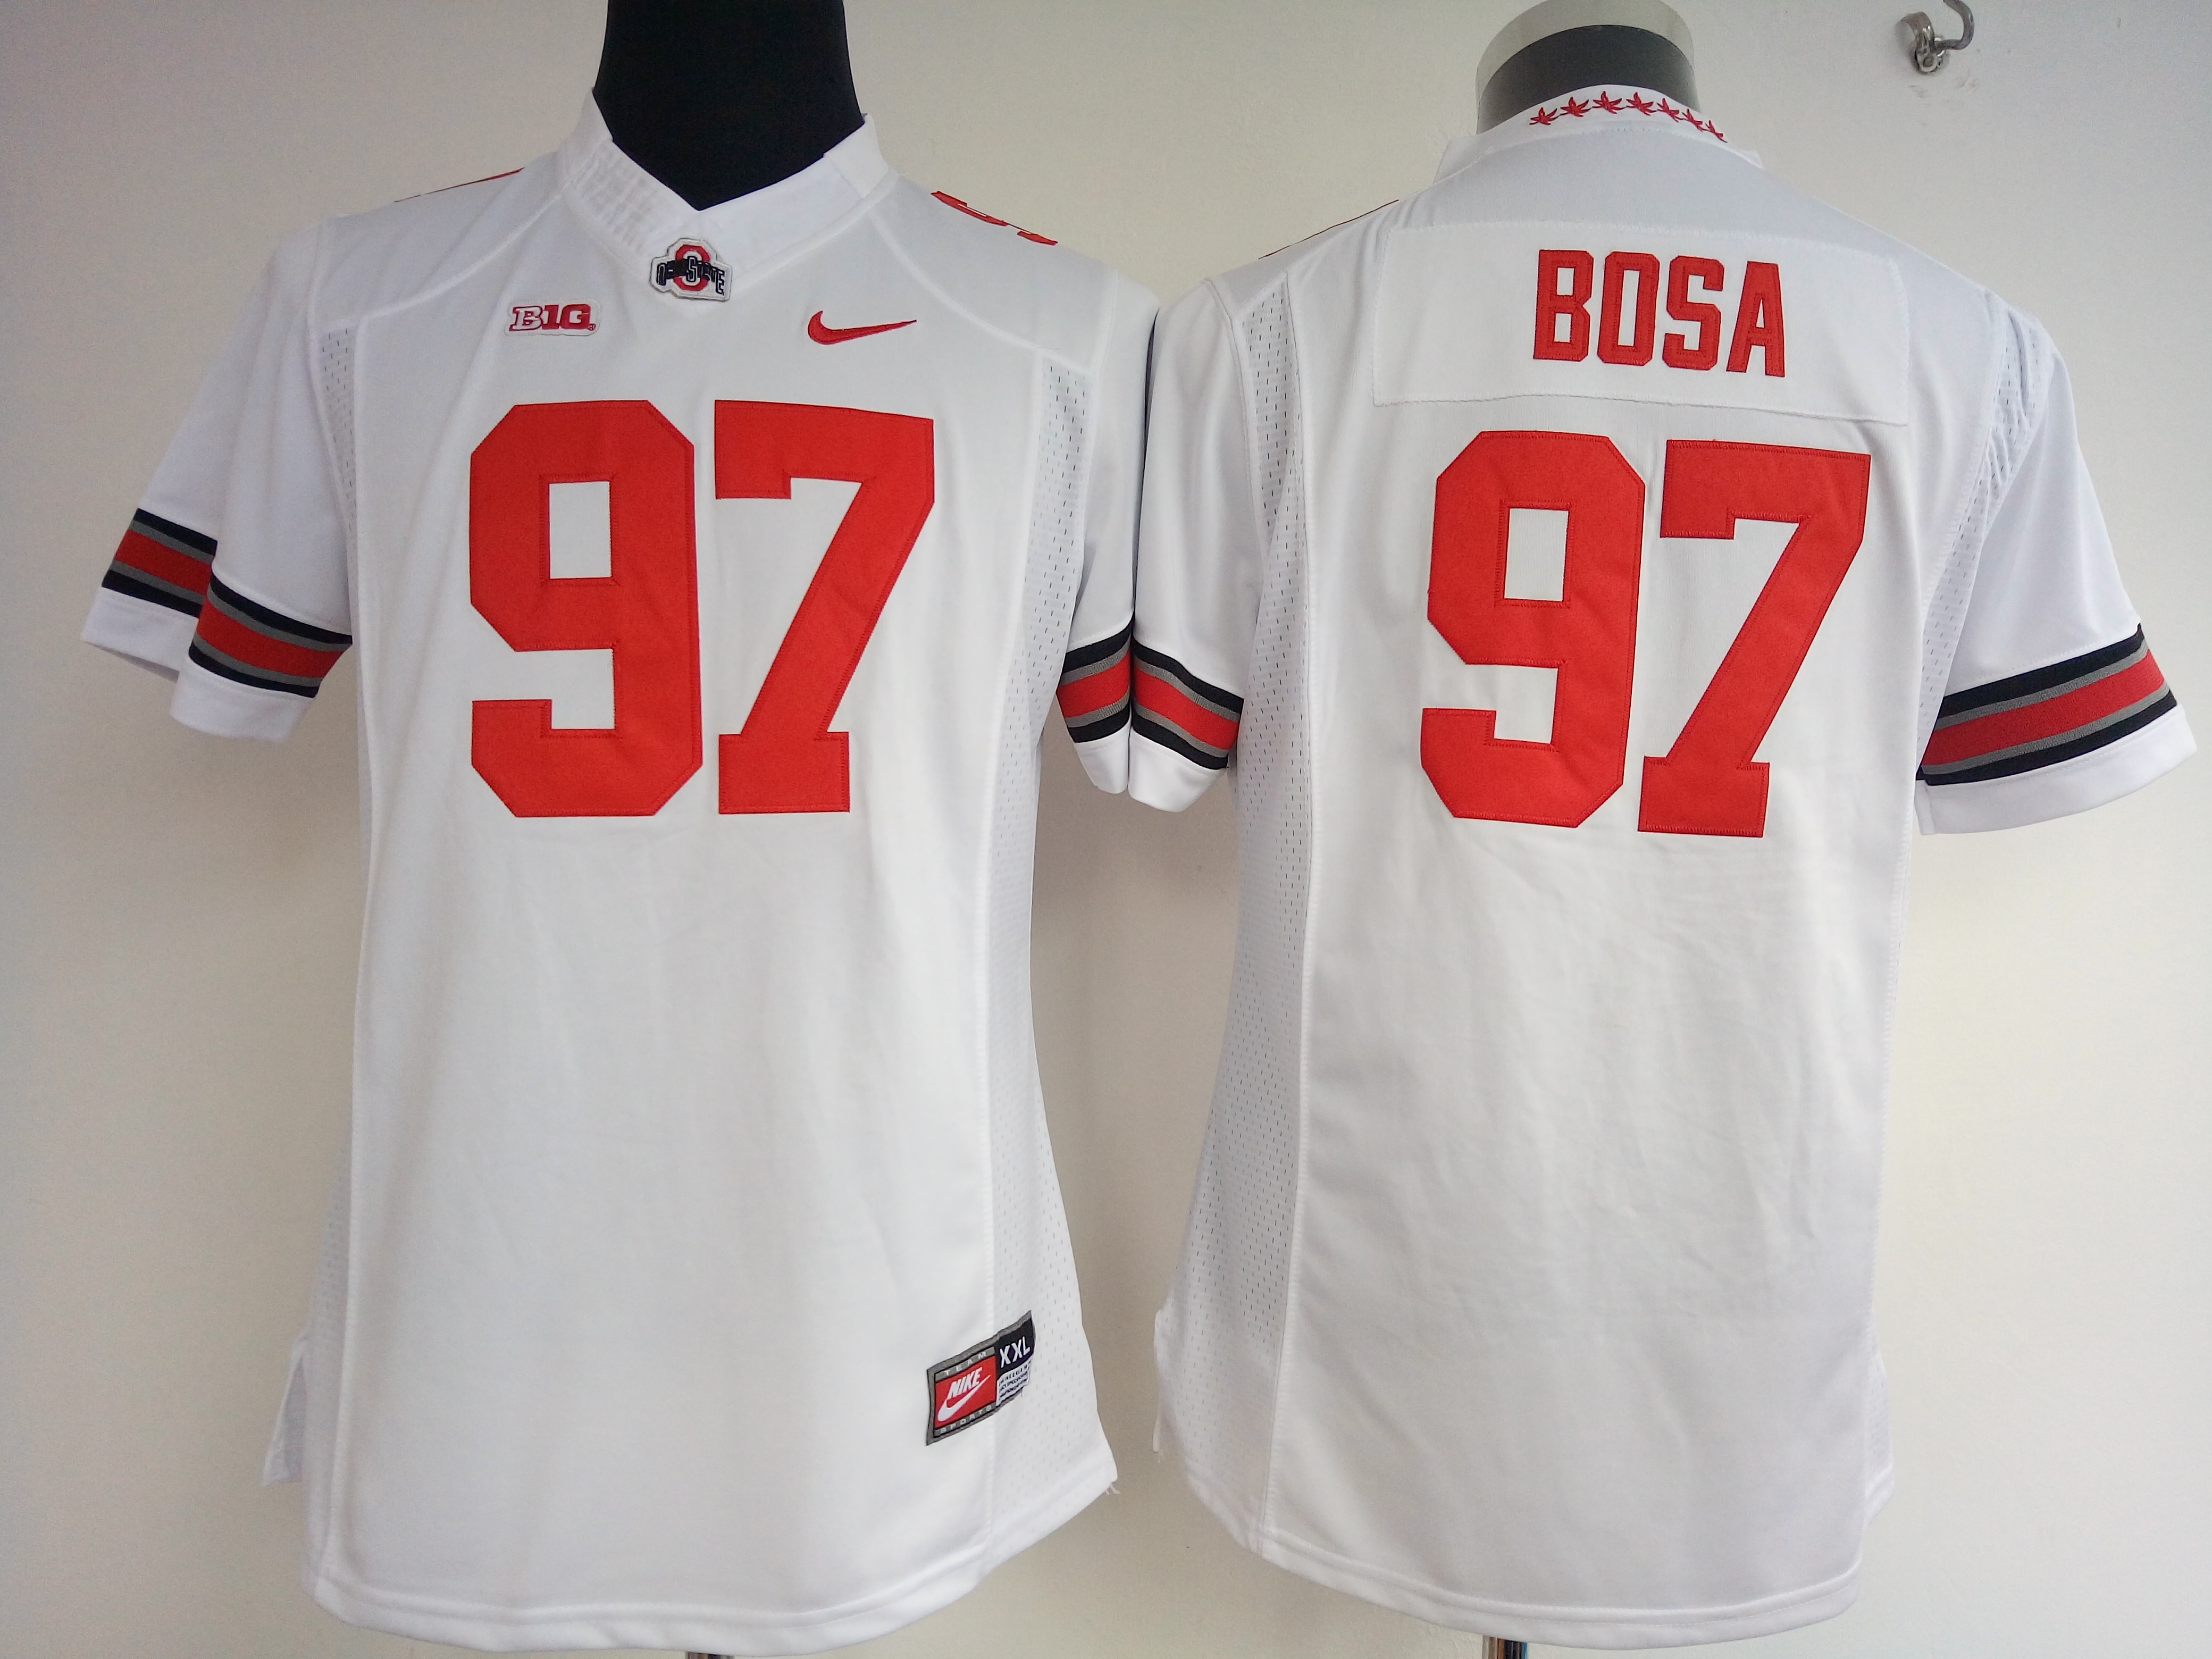 NCAA Womens Ohio State Buckeyes White #97 bosa jerseys